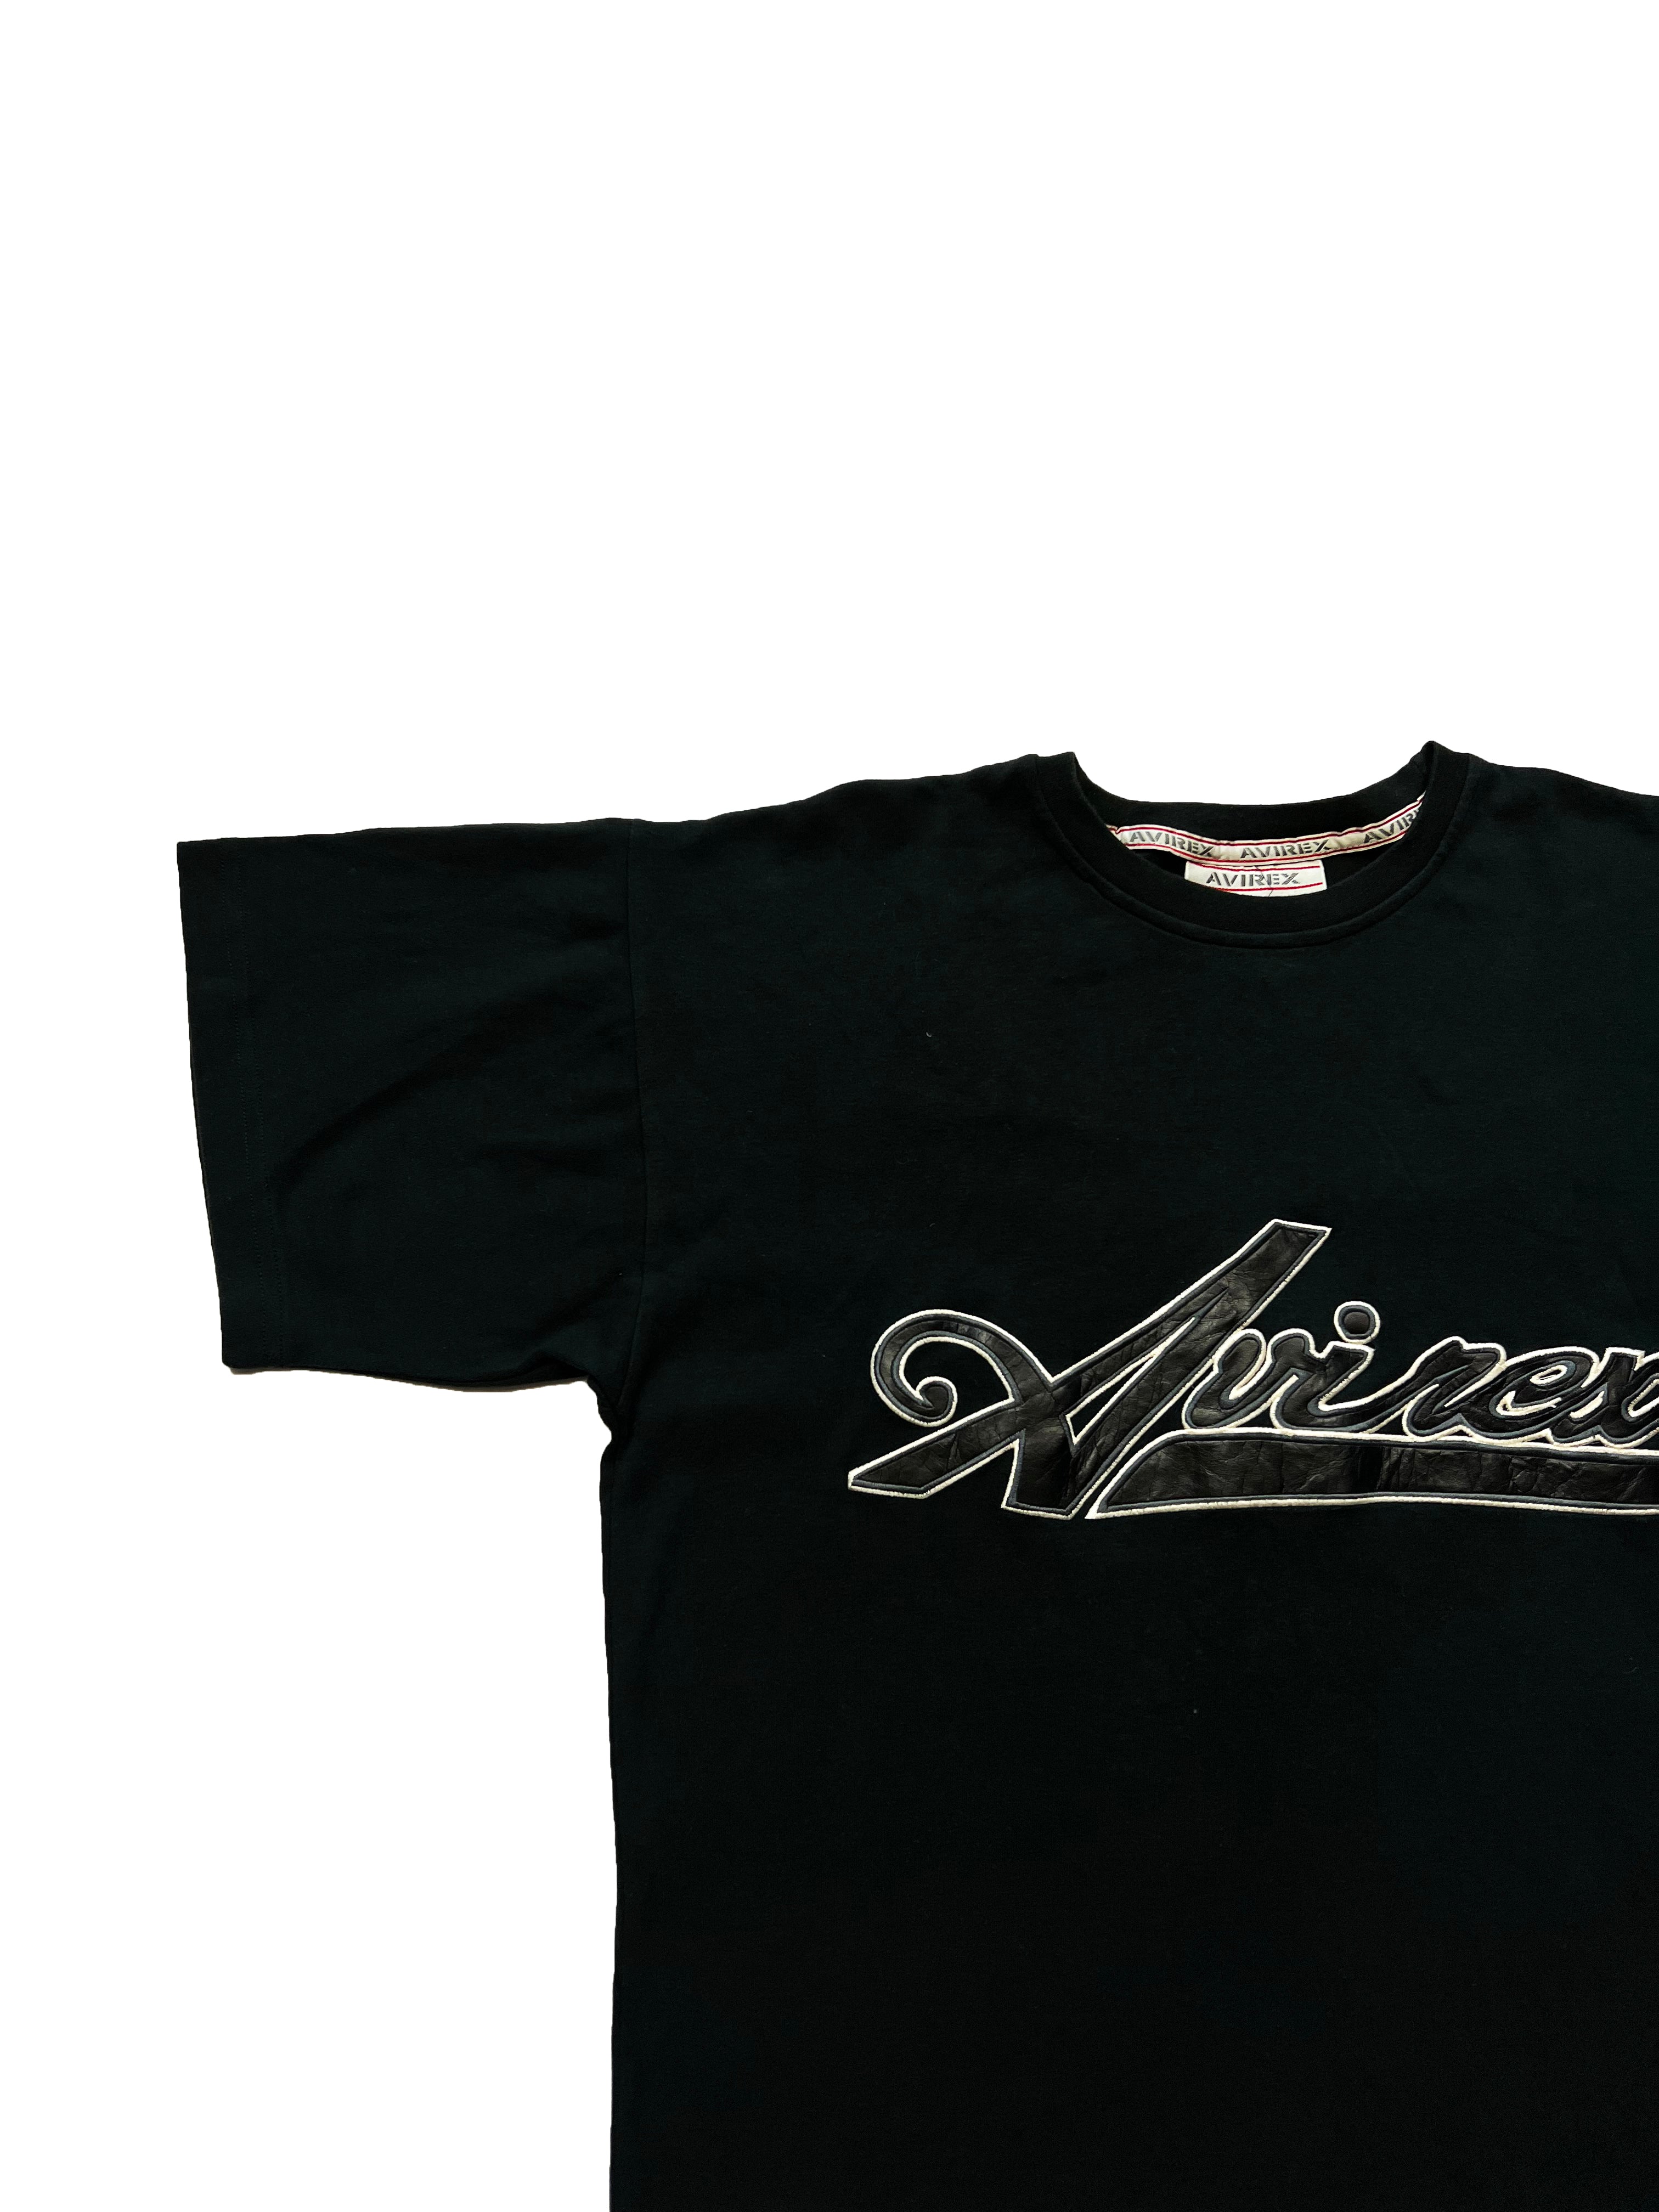 Avirex Black Spell Out T-shirt 90's